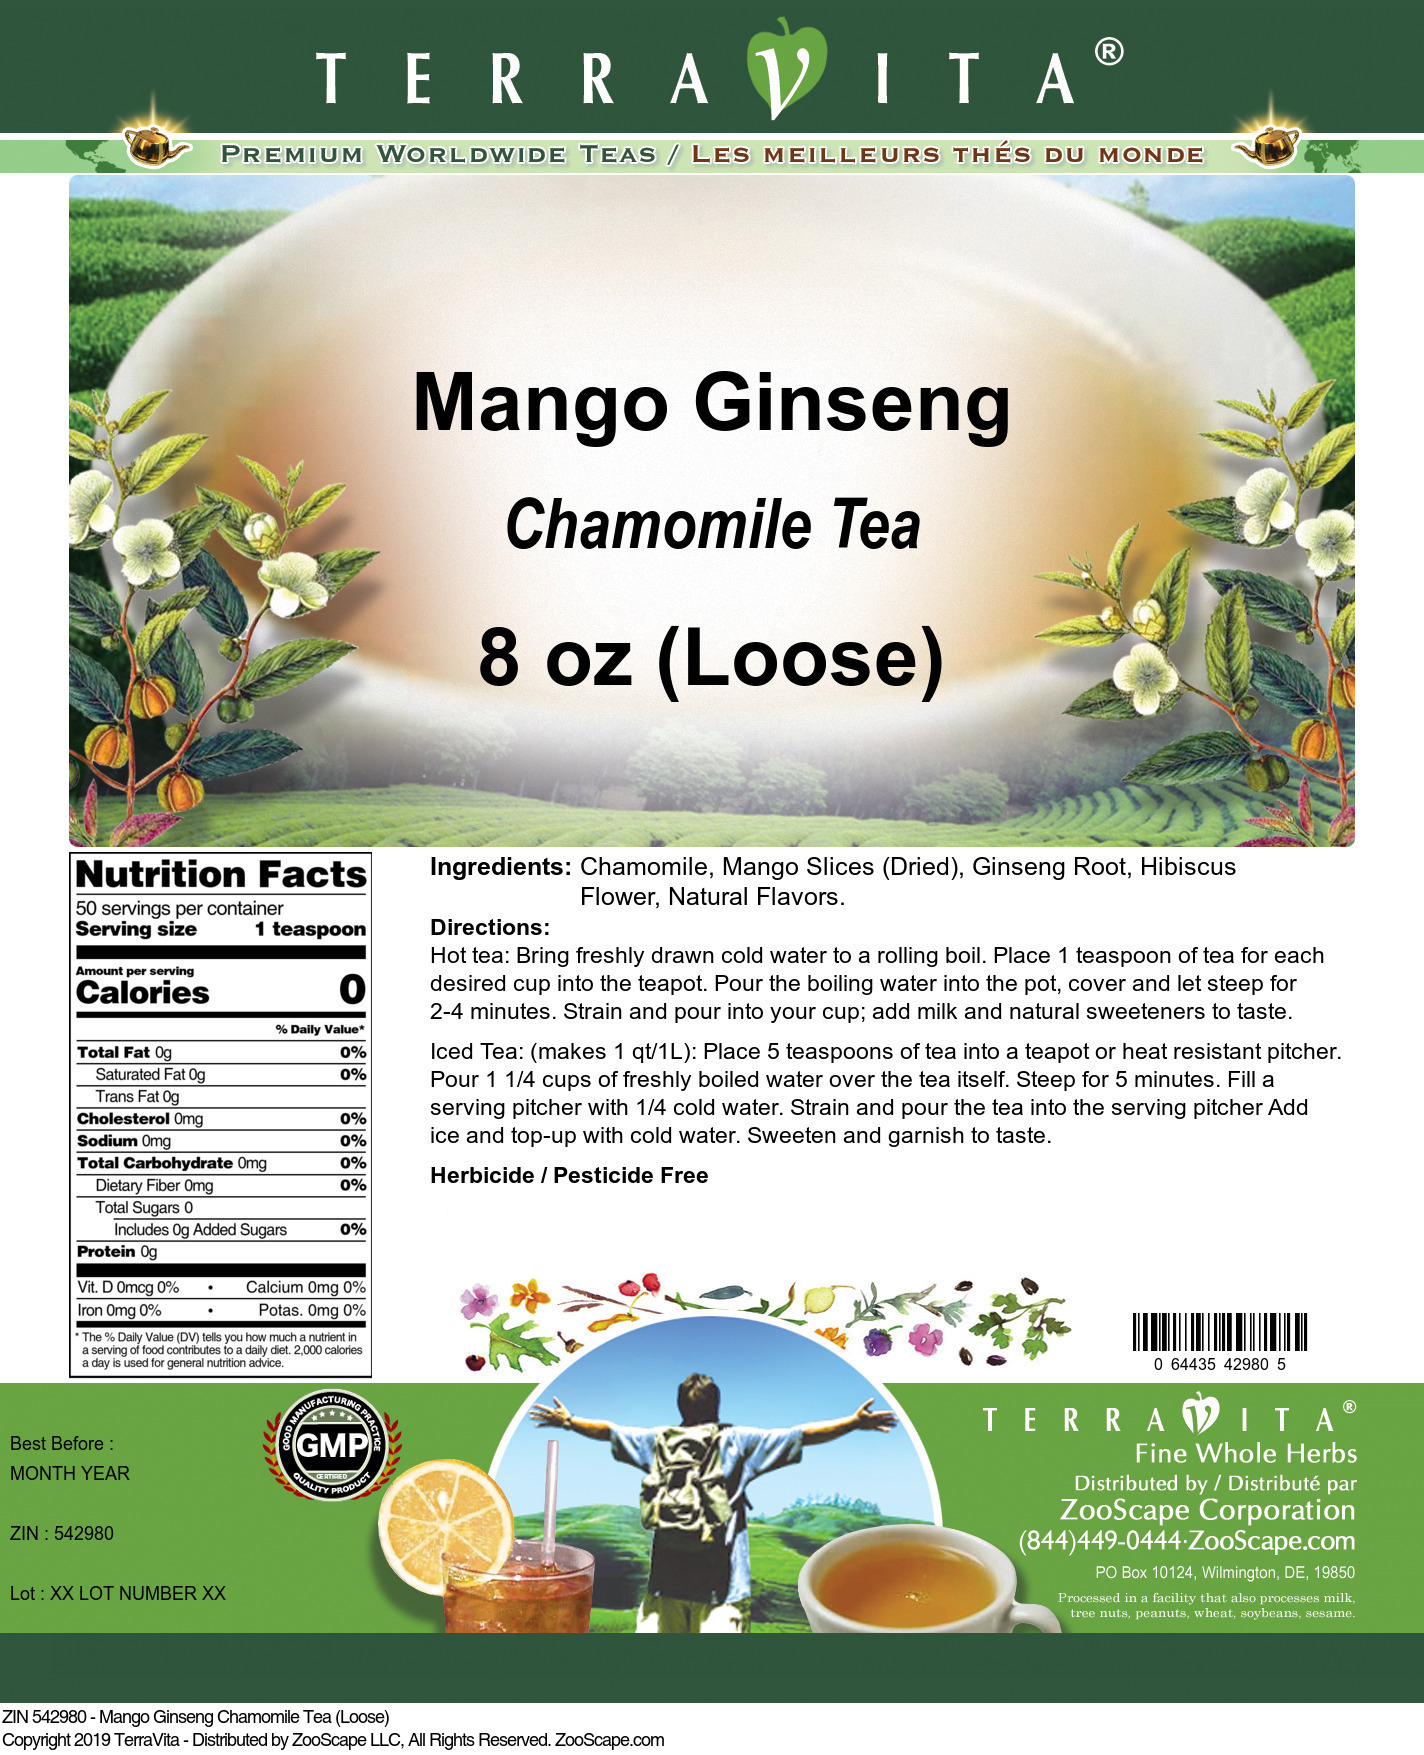 Mango Ginseng Chamomile Tea (Loose) - Label